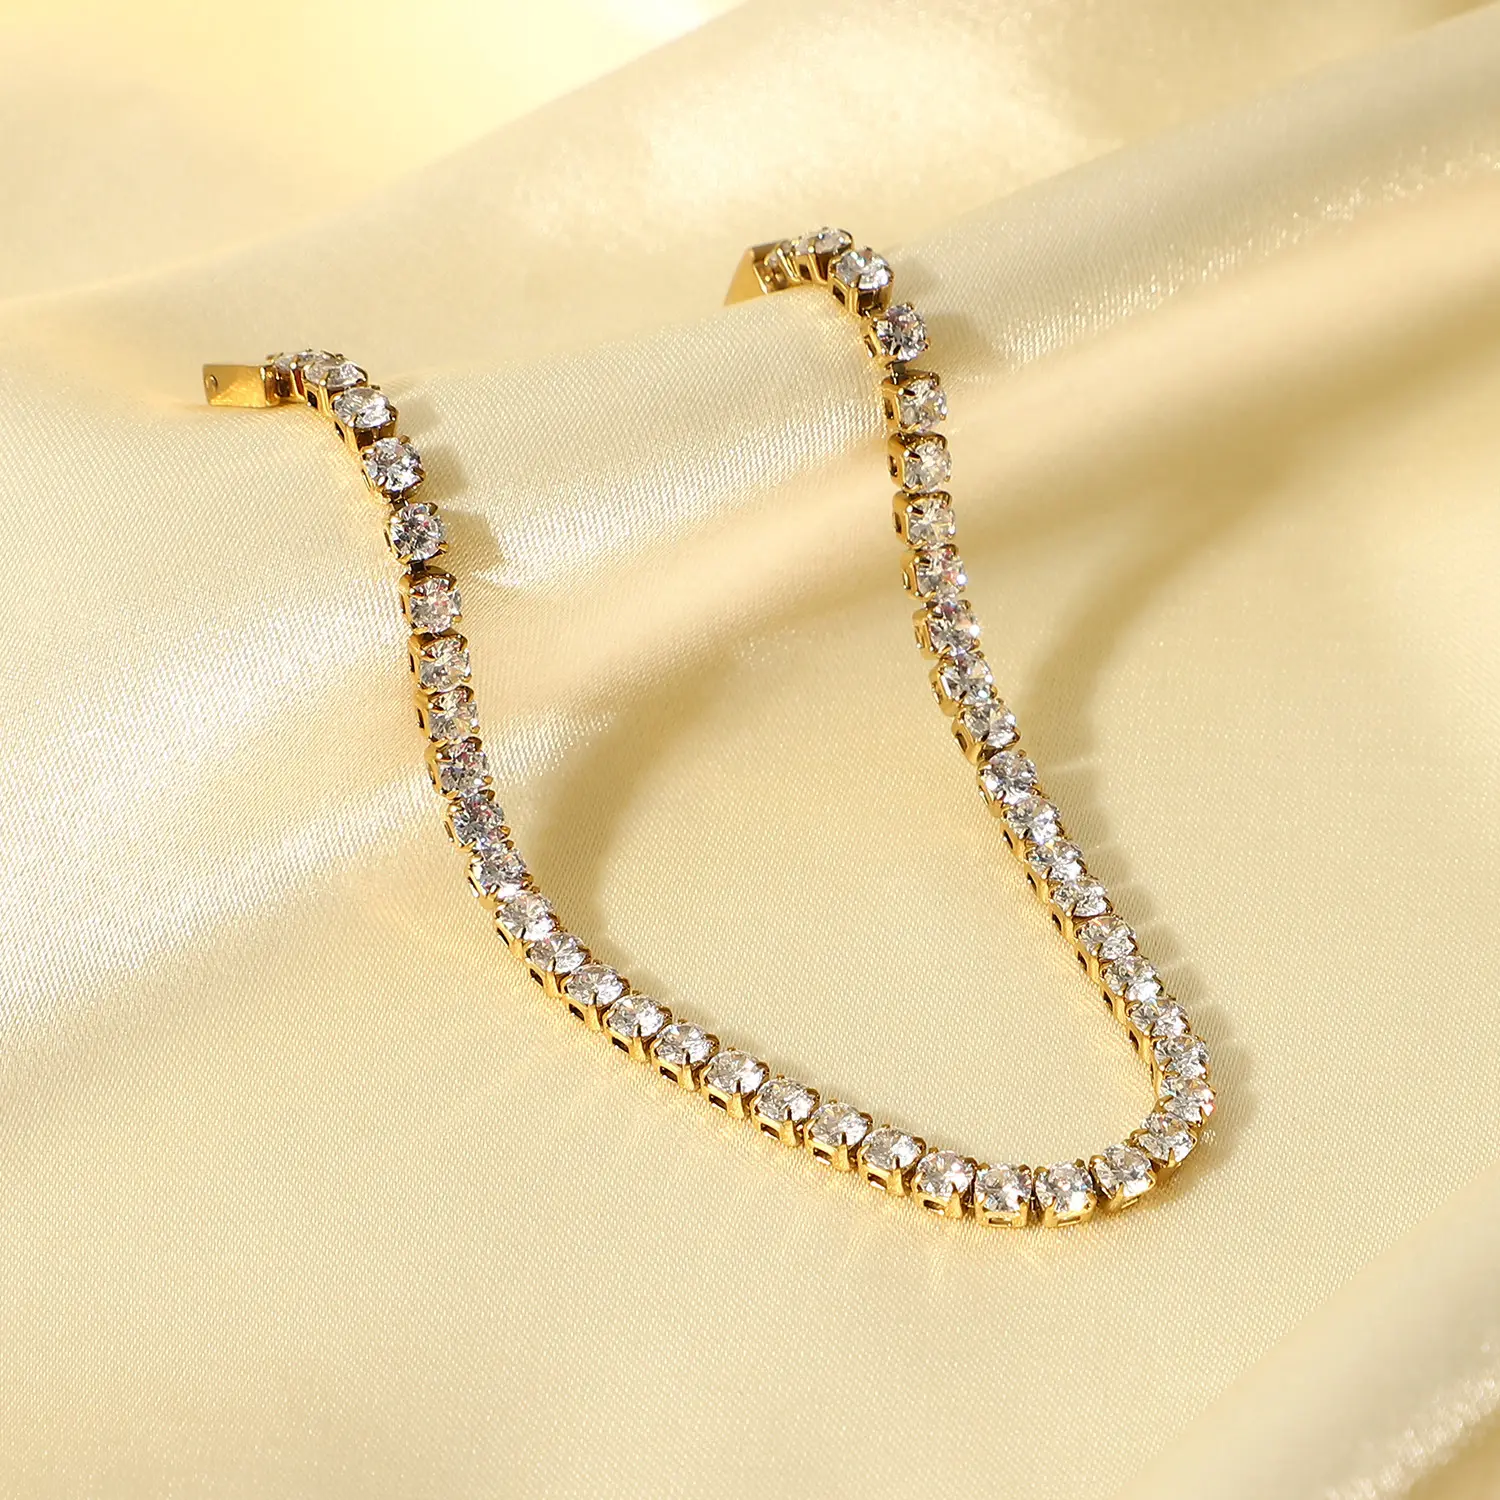 Luxury Jewelry Stainless Steel Snap 14K Gold Plated Full Zircon Bracelet For Women